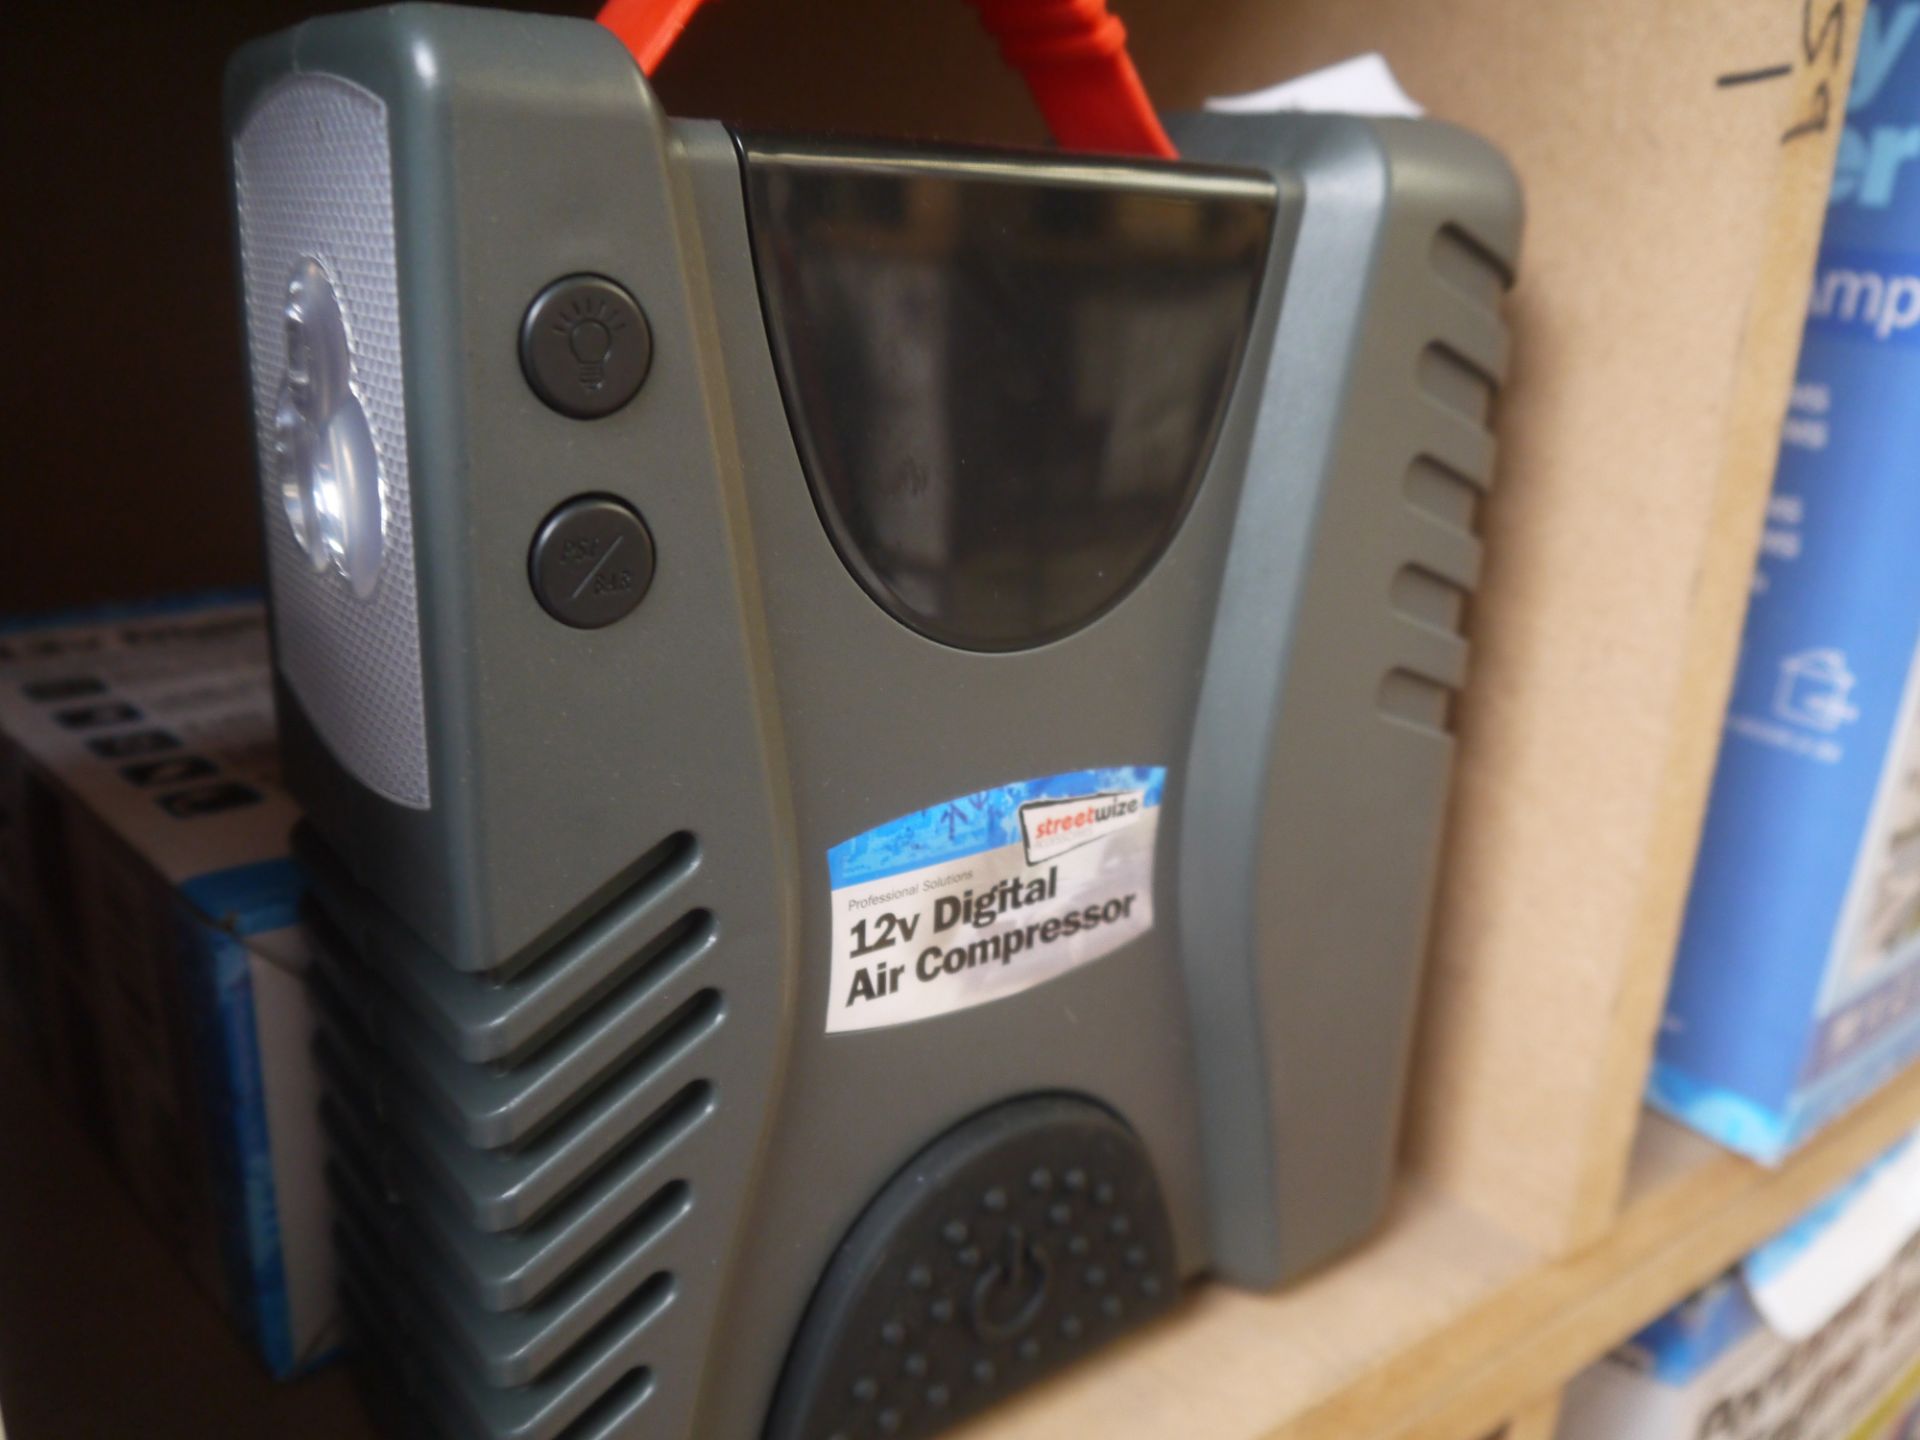 StreetWize 12V Digital Air Compressor. Boxed.